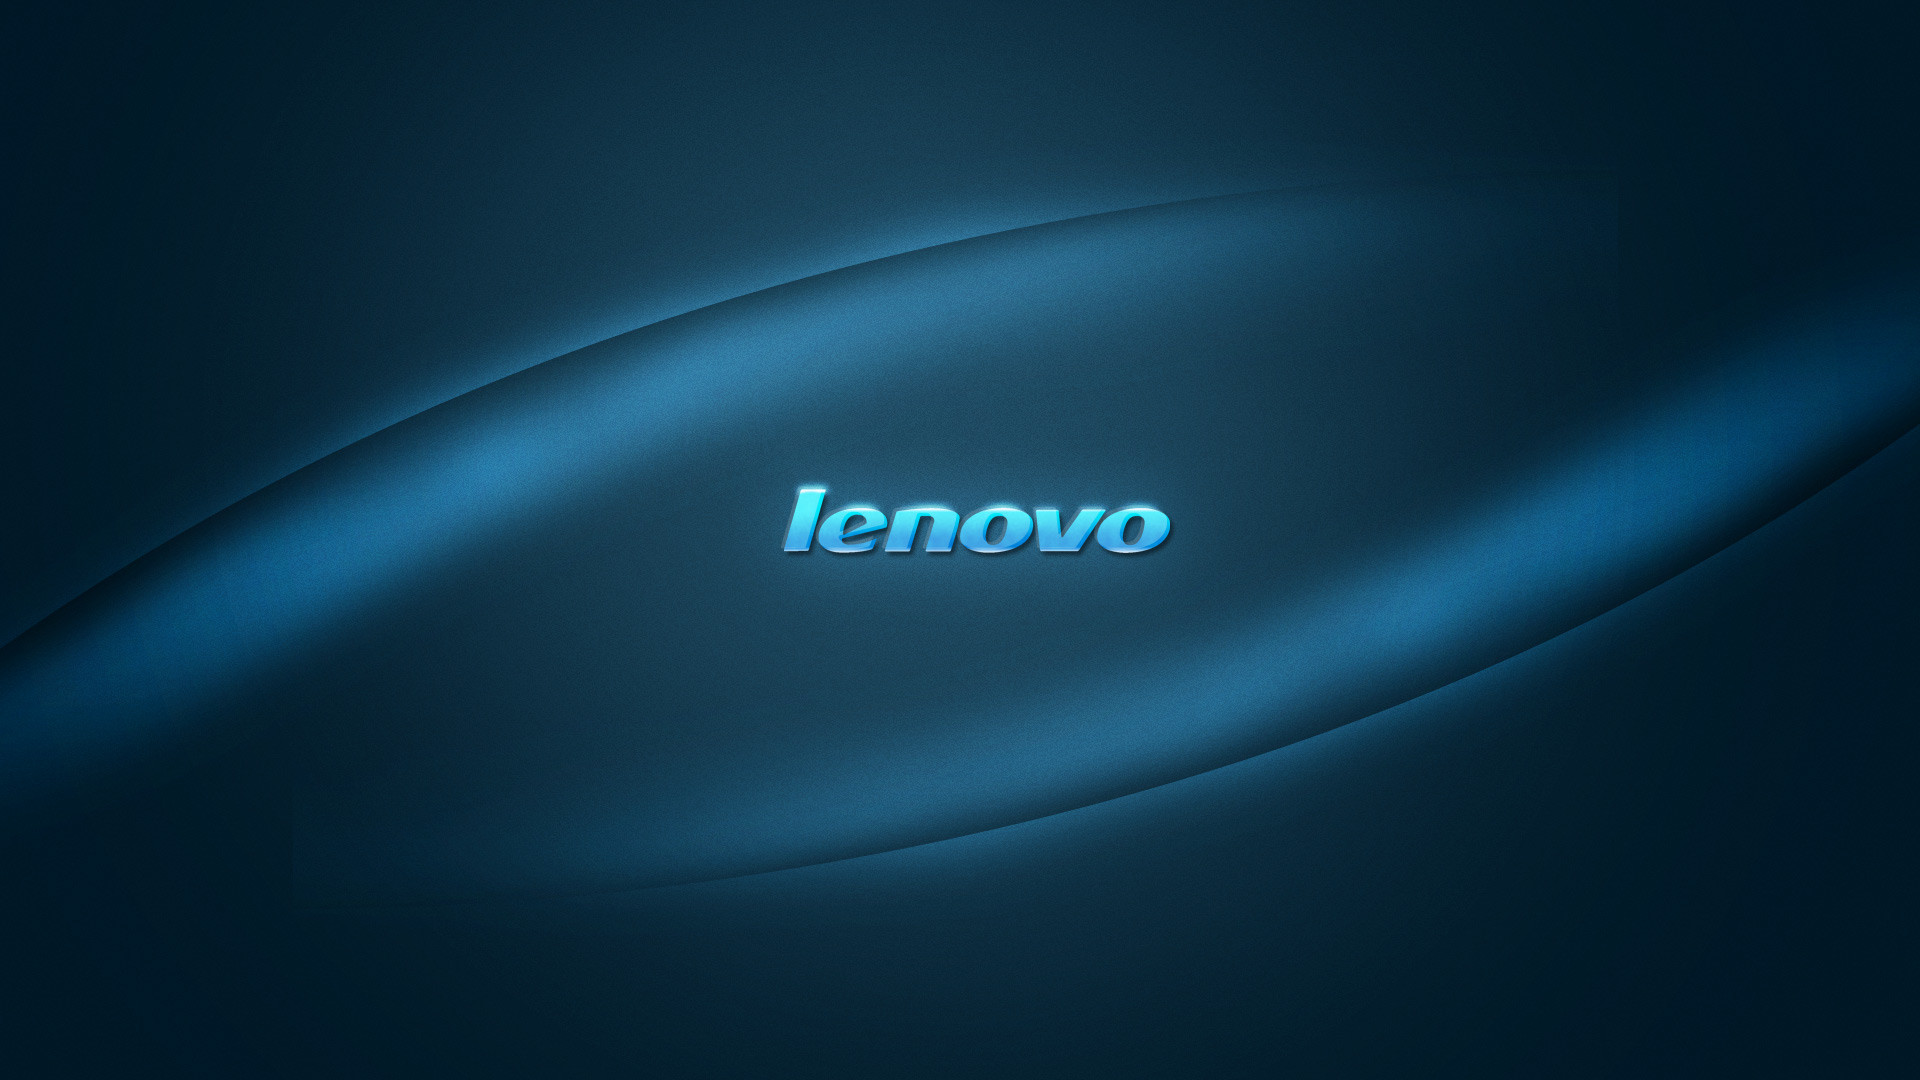 Lenovo Wallpaper | Lenovo wallpapers, Laptop wallpaper, Hd wallpapers for  laptop